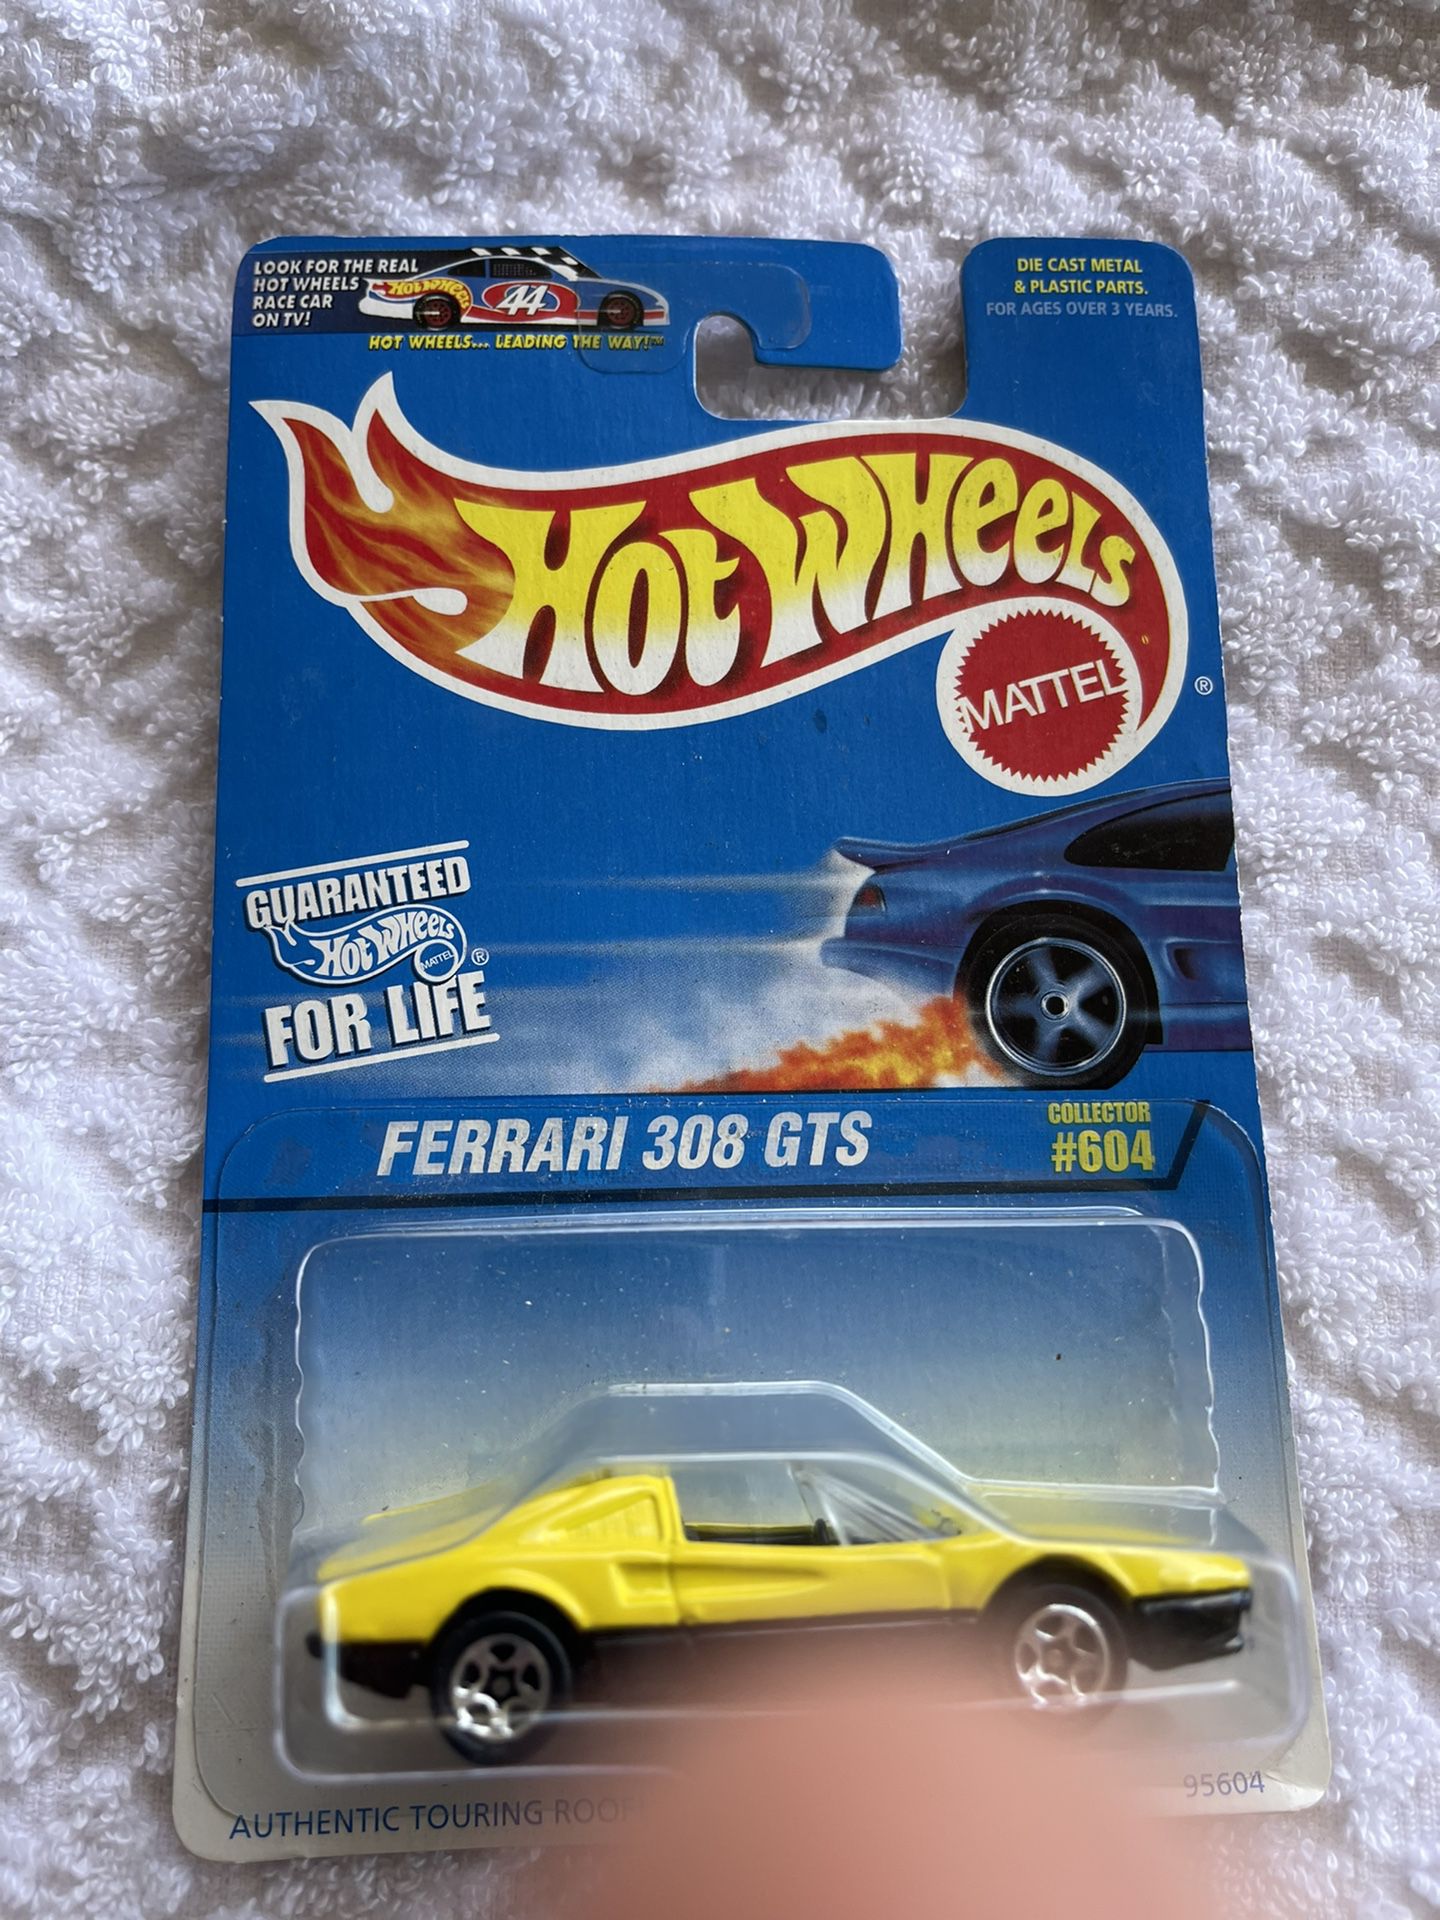 1996 Hot Wheels Ferrari 308 GTS #604 5 Spoke Wheels 1/64 Htf